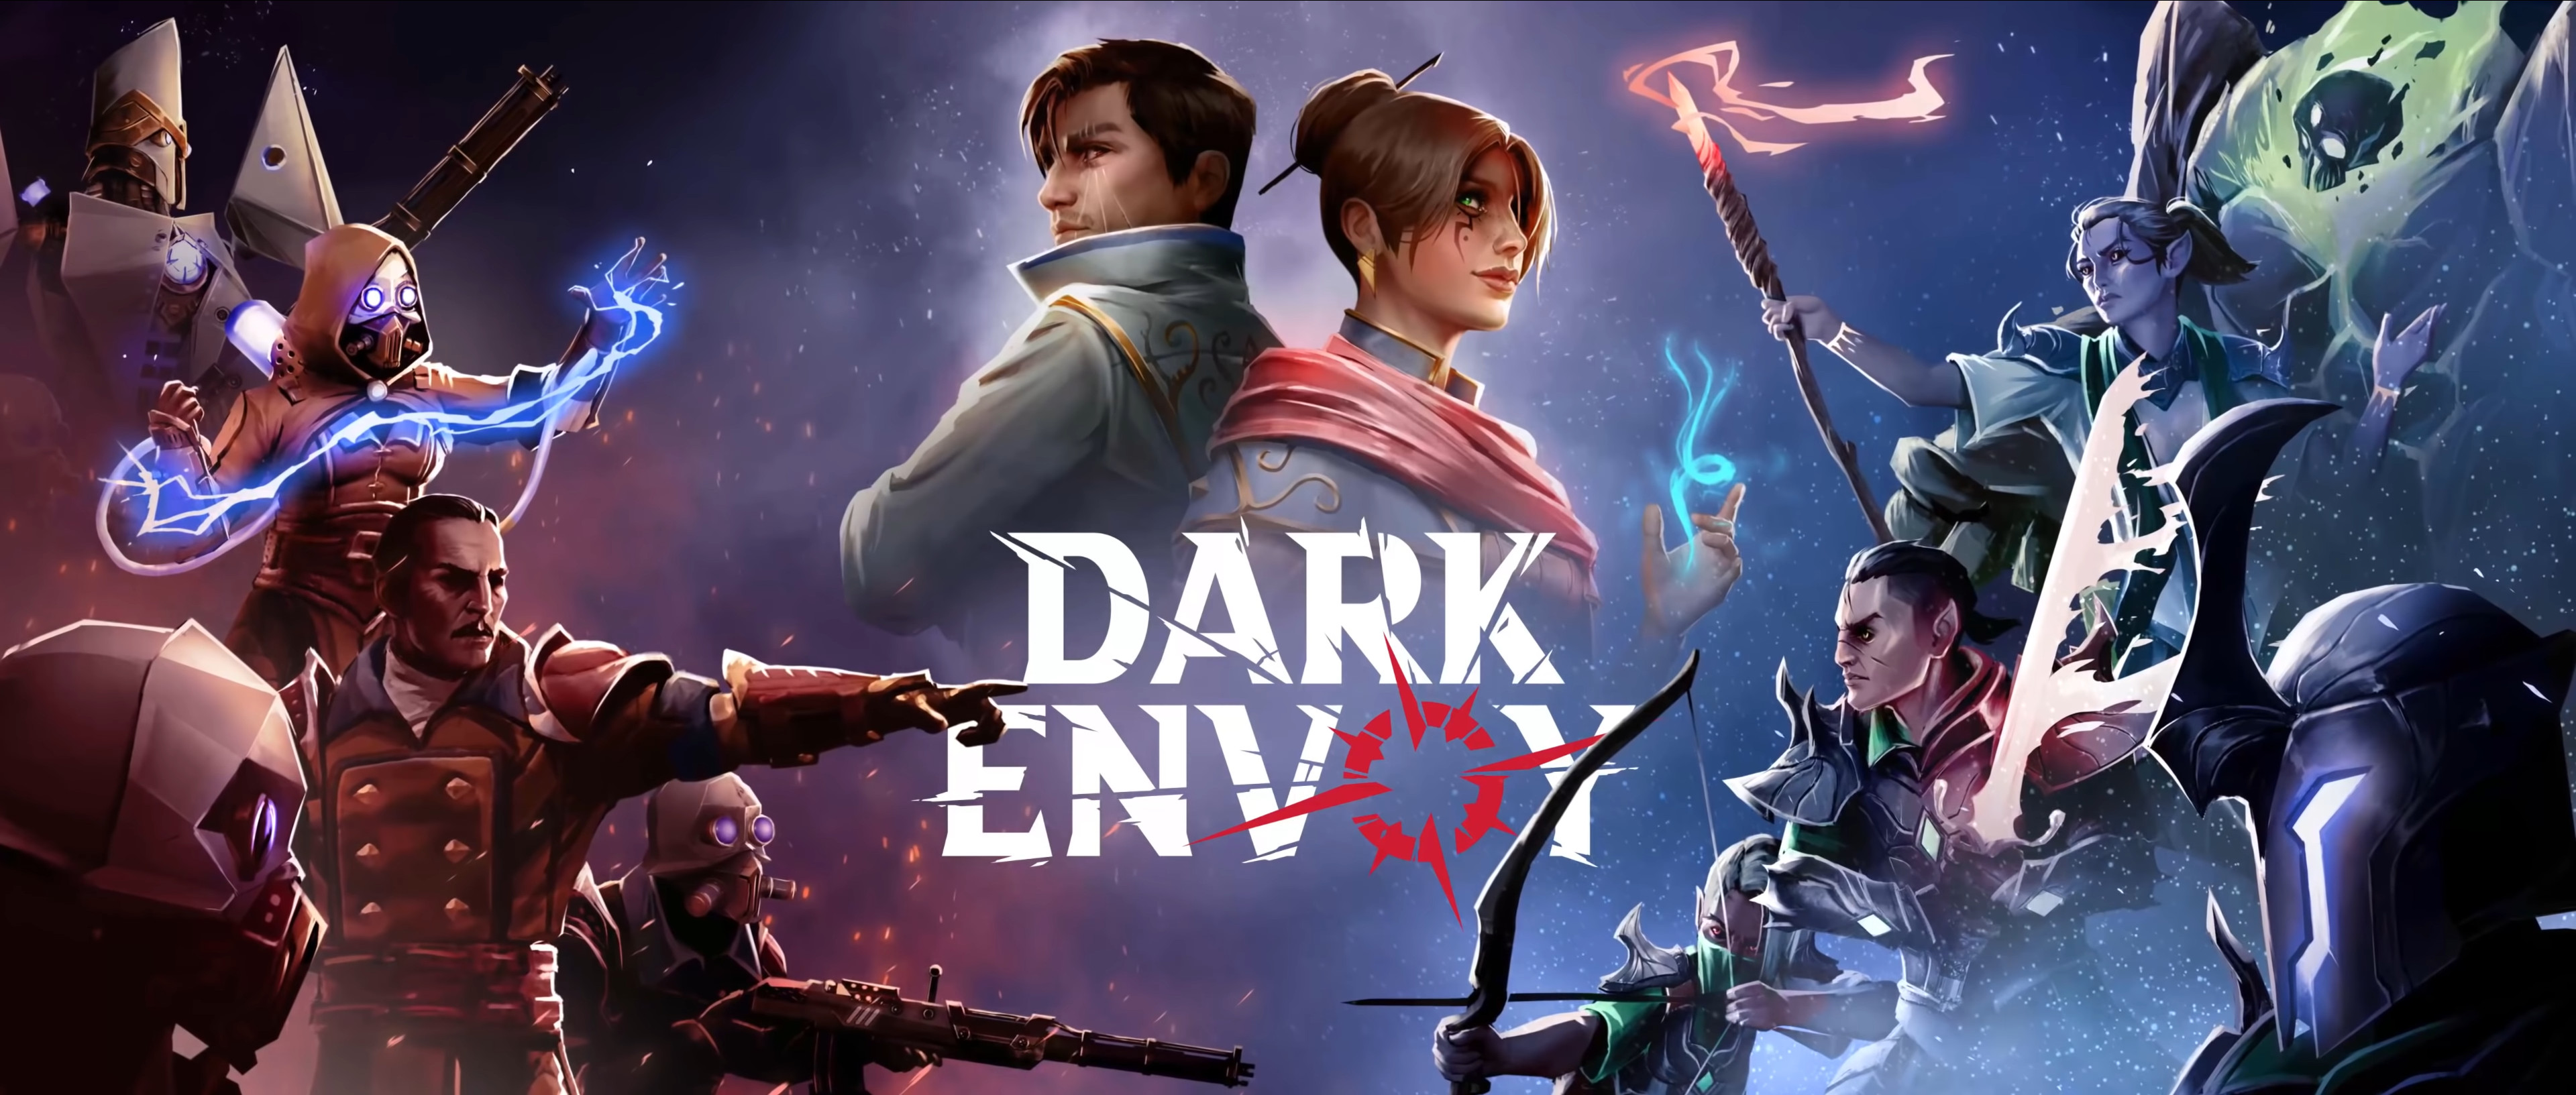 Please visit Steam to find out more about Dark Envoy:
https://store.steampowered.com/app/945770/Dark_Envoy/